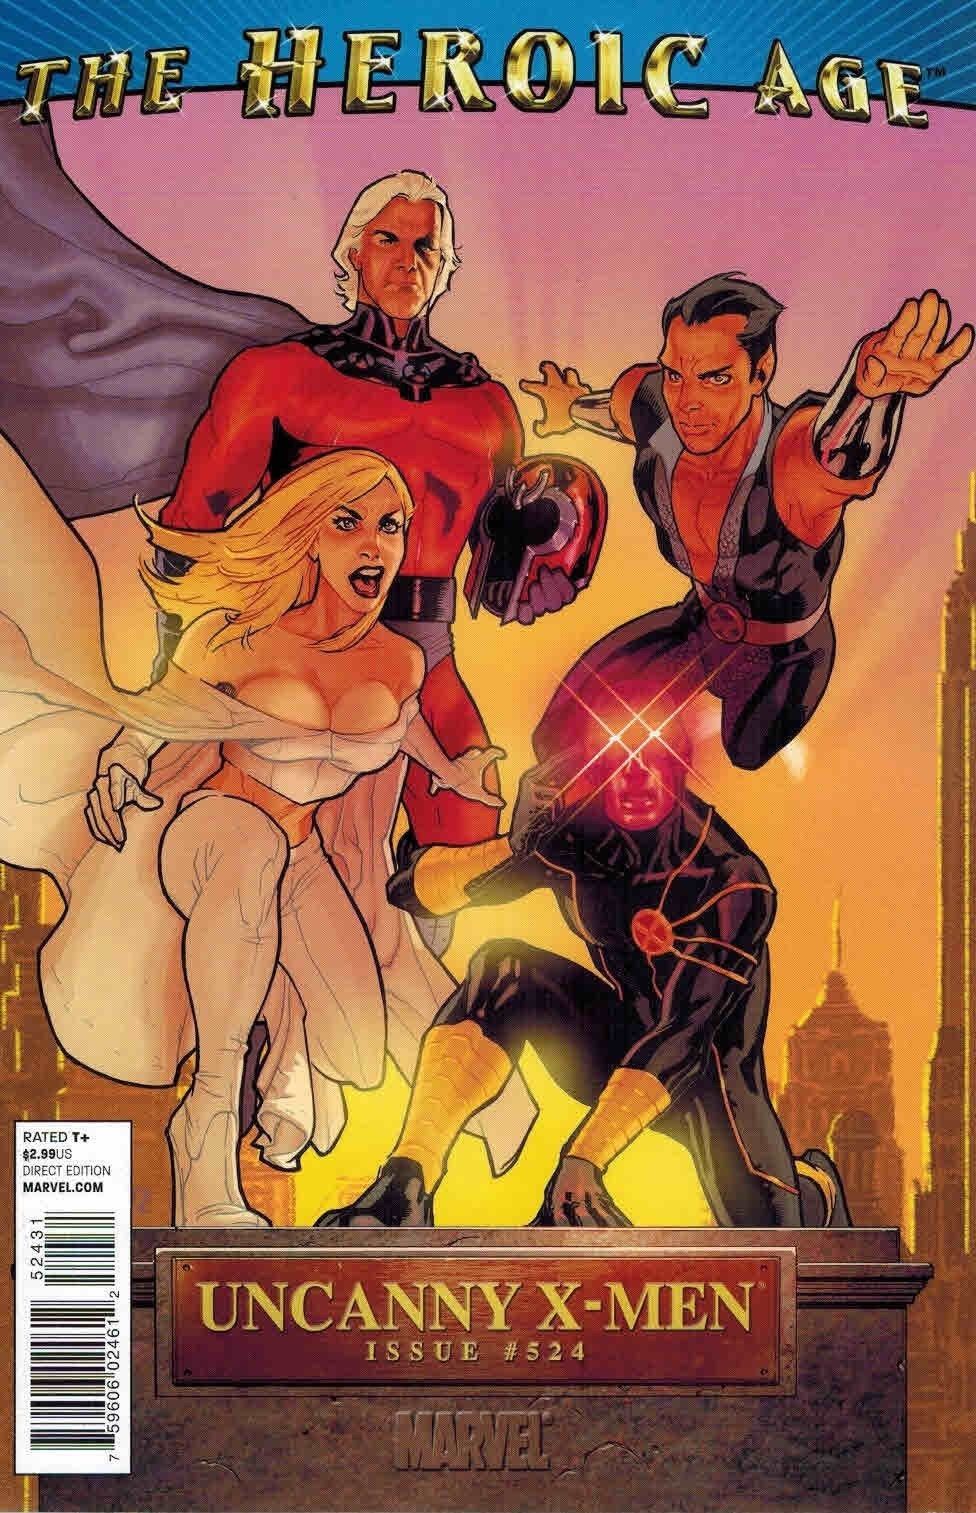 Uncanny X-Men #524 (Heroic Age Variant) (1963)